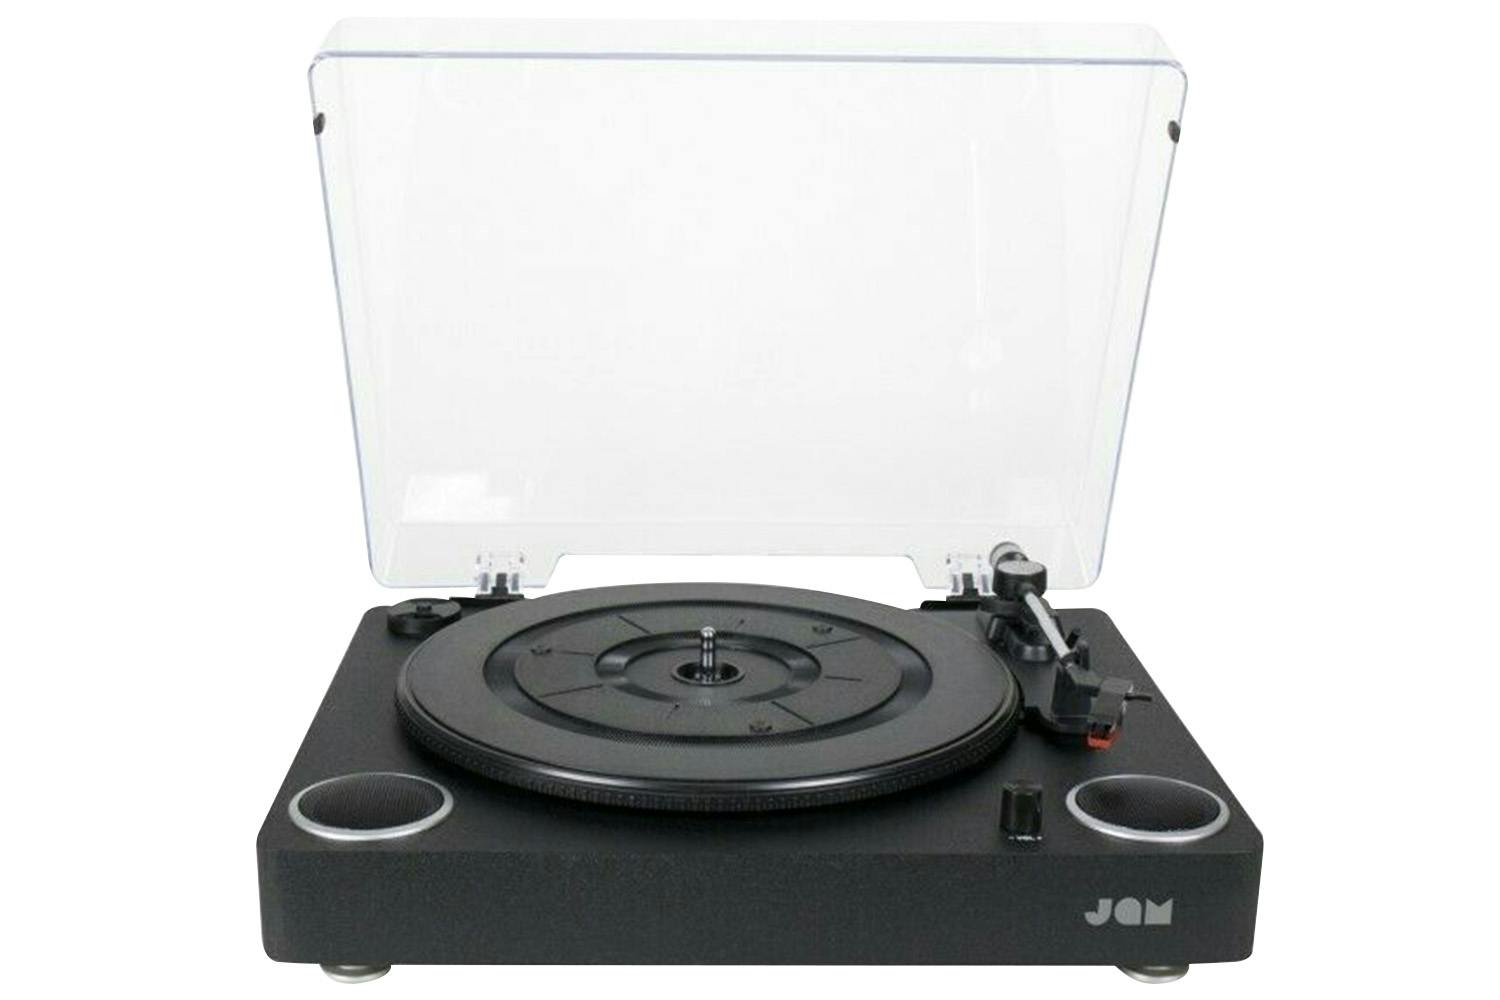 Jam Sound Turntable Built-in Speakers Vinyl Record | HX-TTP200BK-GB